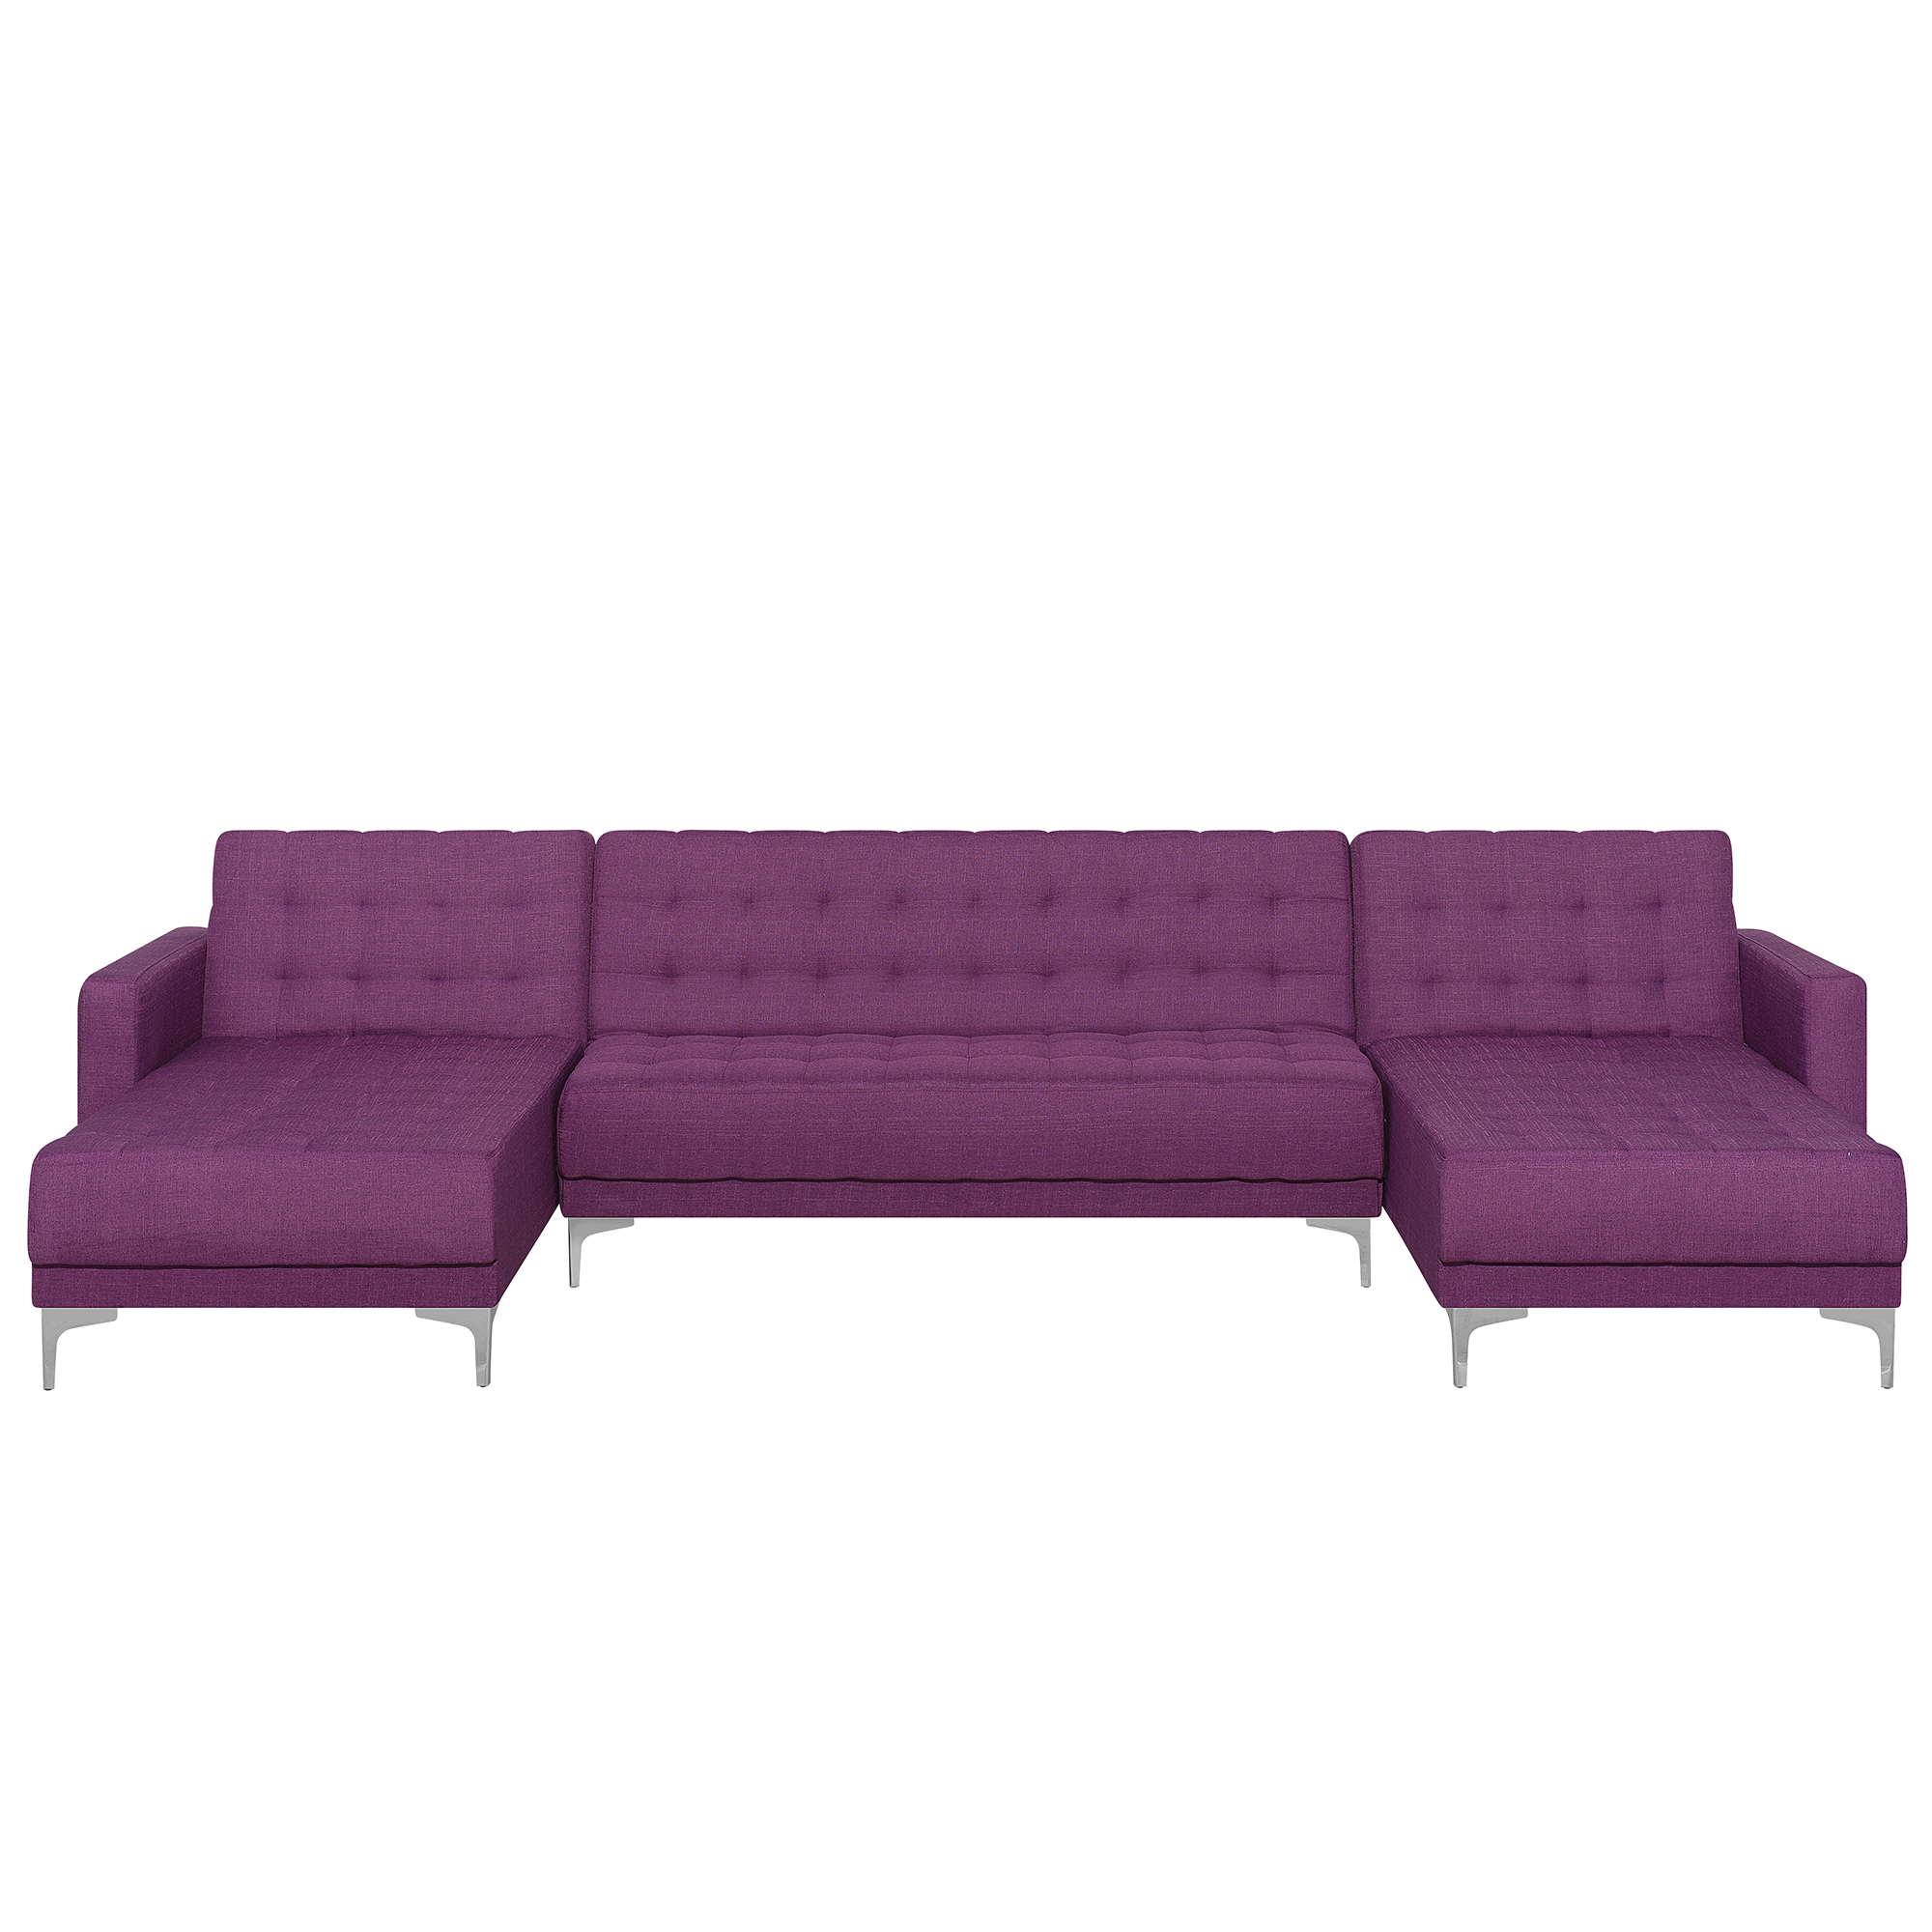 Beliani Corner Sofa Bed Purple Tufted Fabric Modern U-Shaped Modular 5 Seater with Chaise Longues